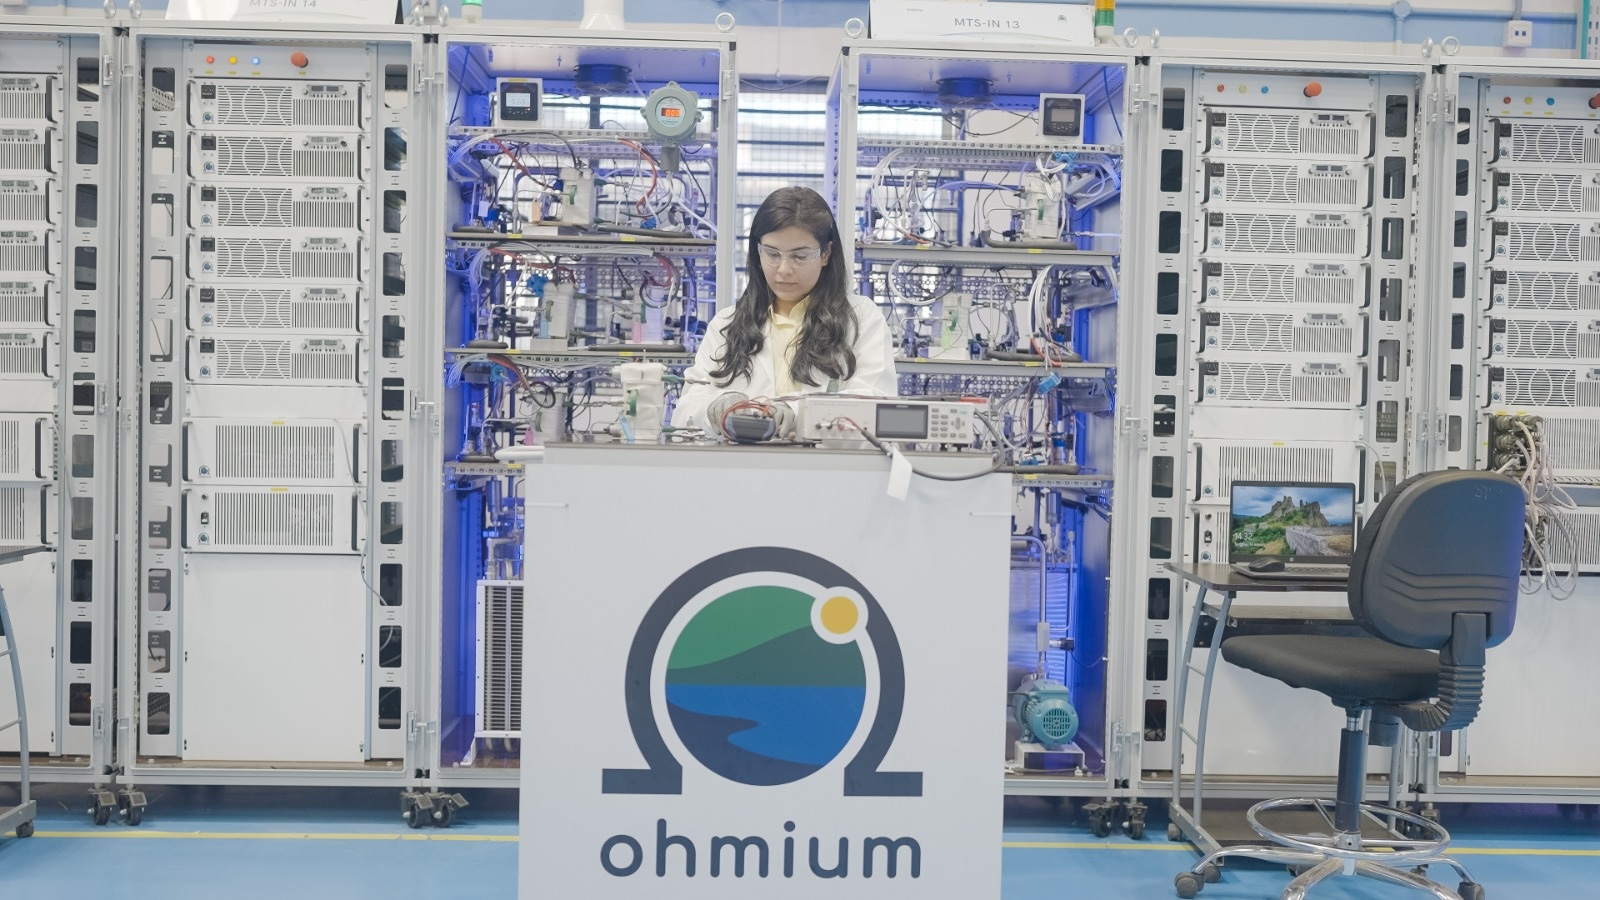 Ohmium employee working with electrolyzers for green hydrogen - making green hydrogen from seawater